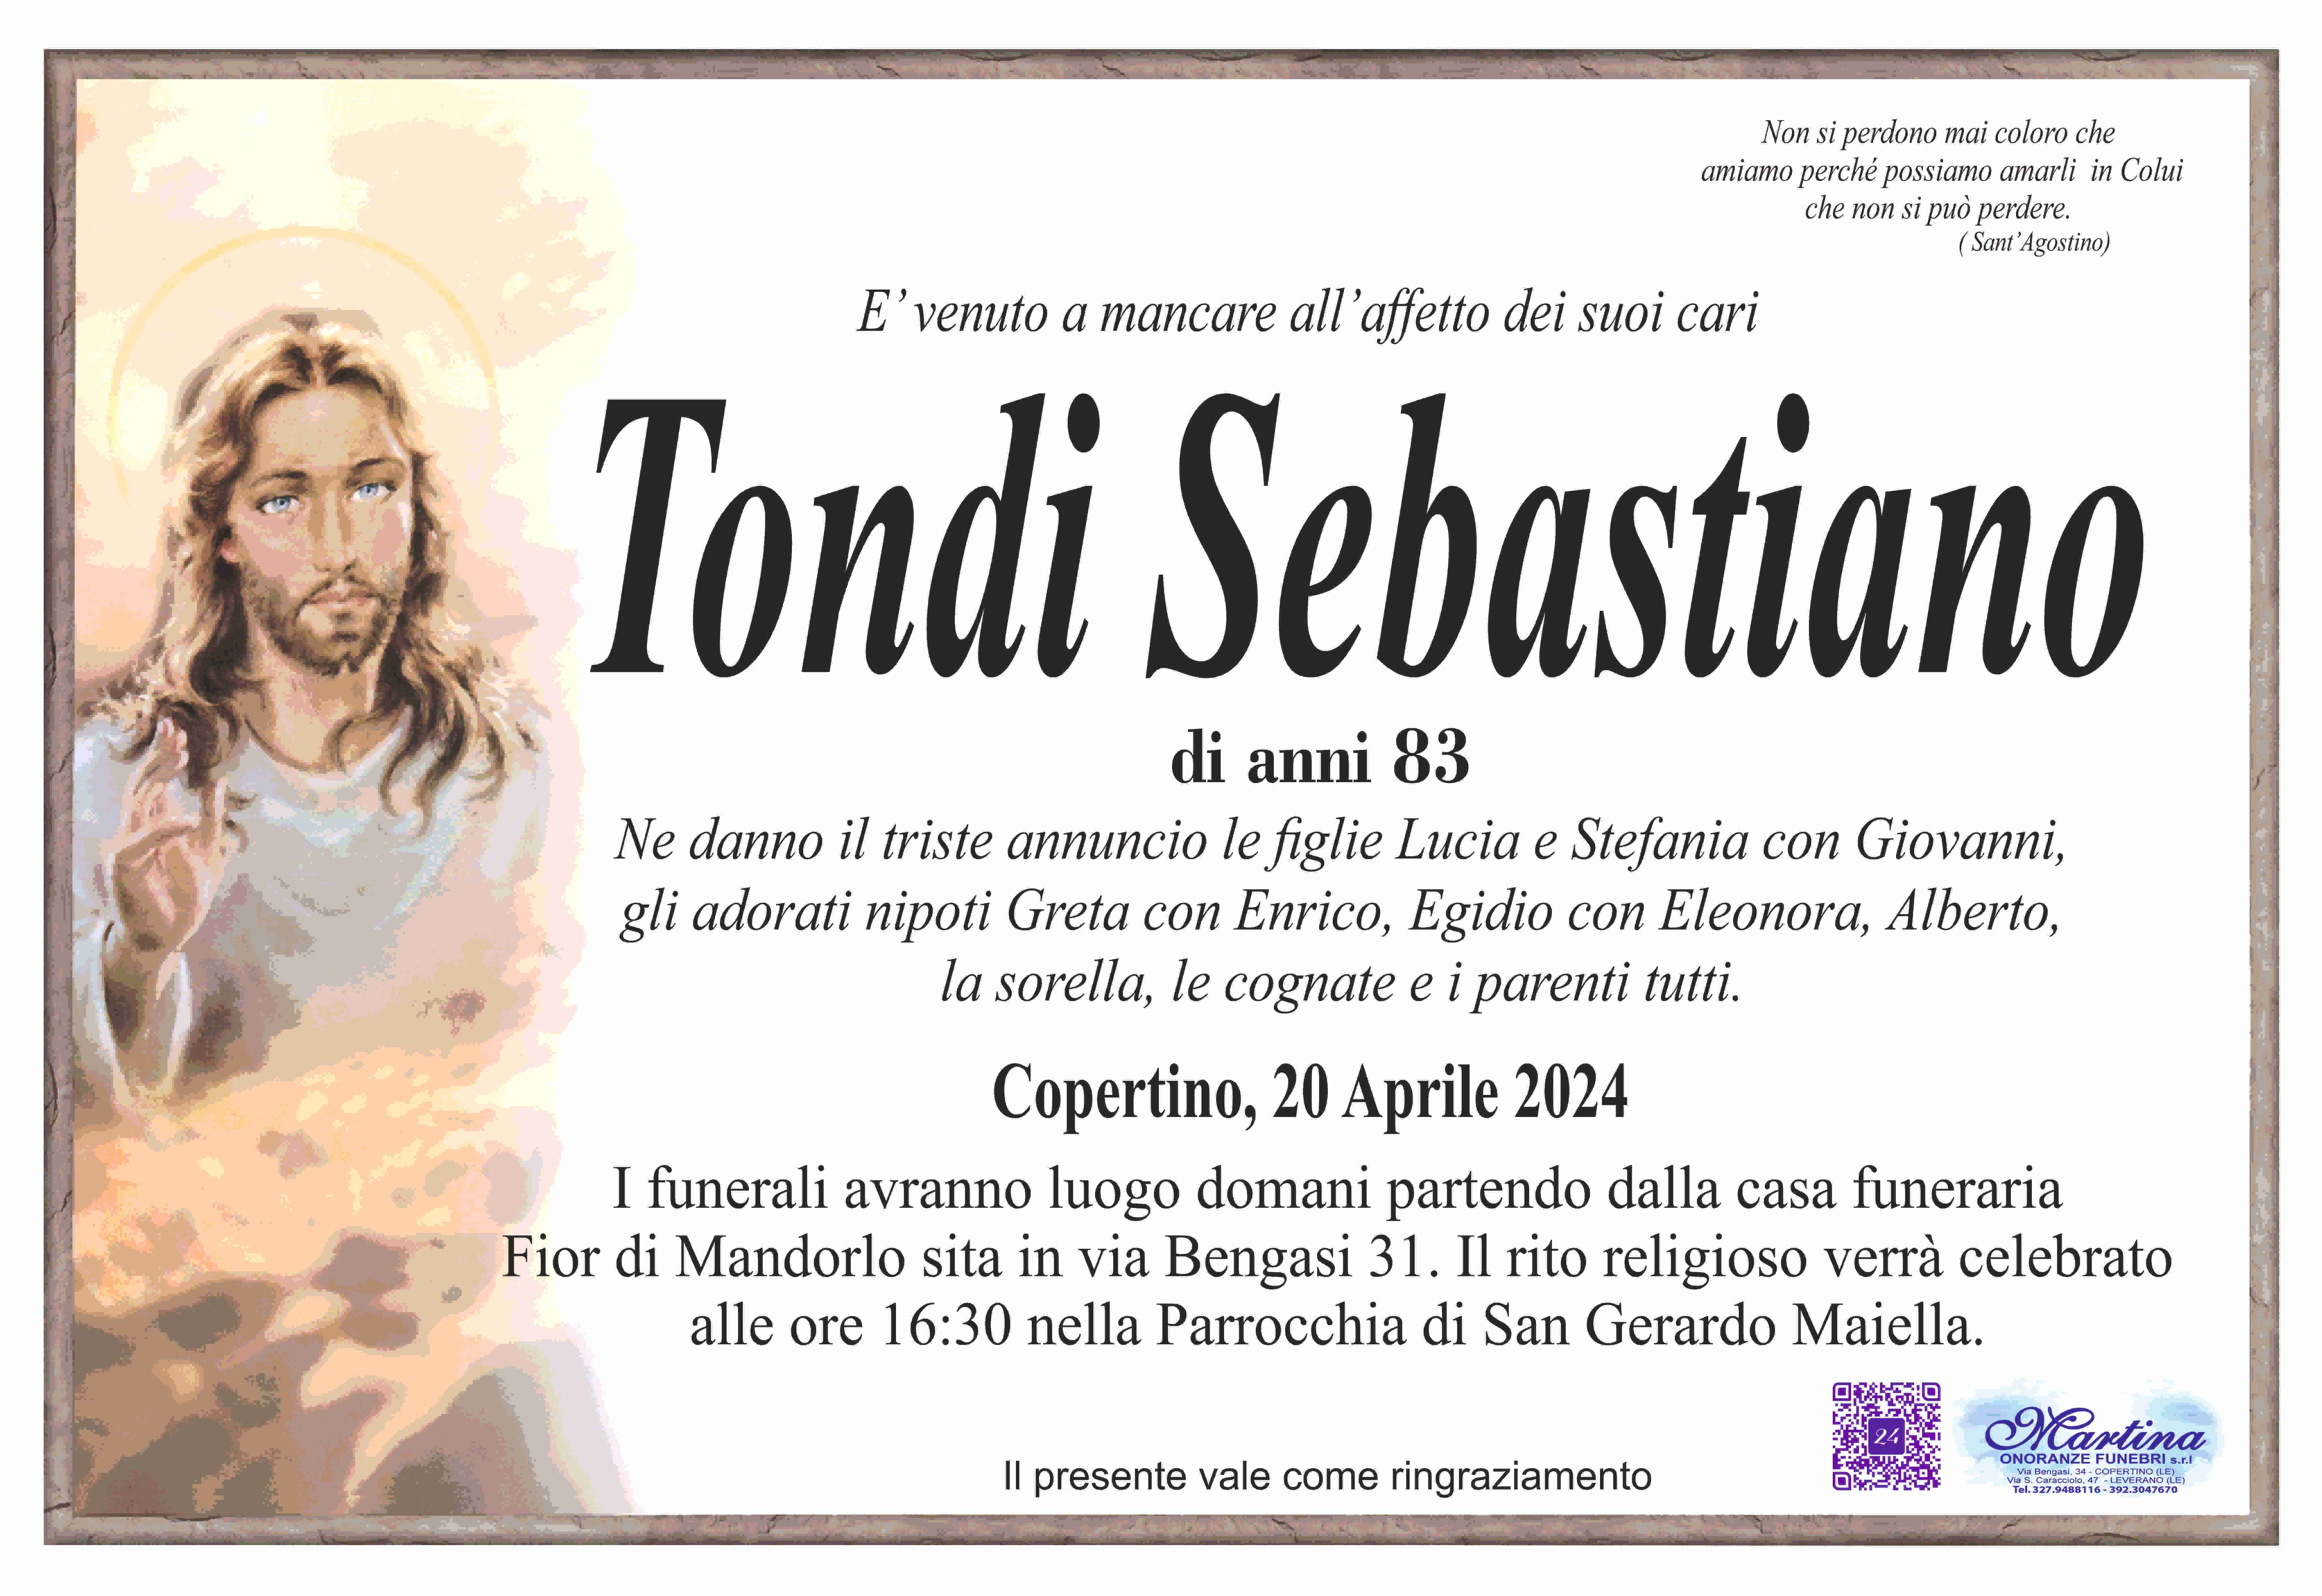 Sebastiano Tondi